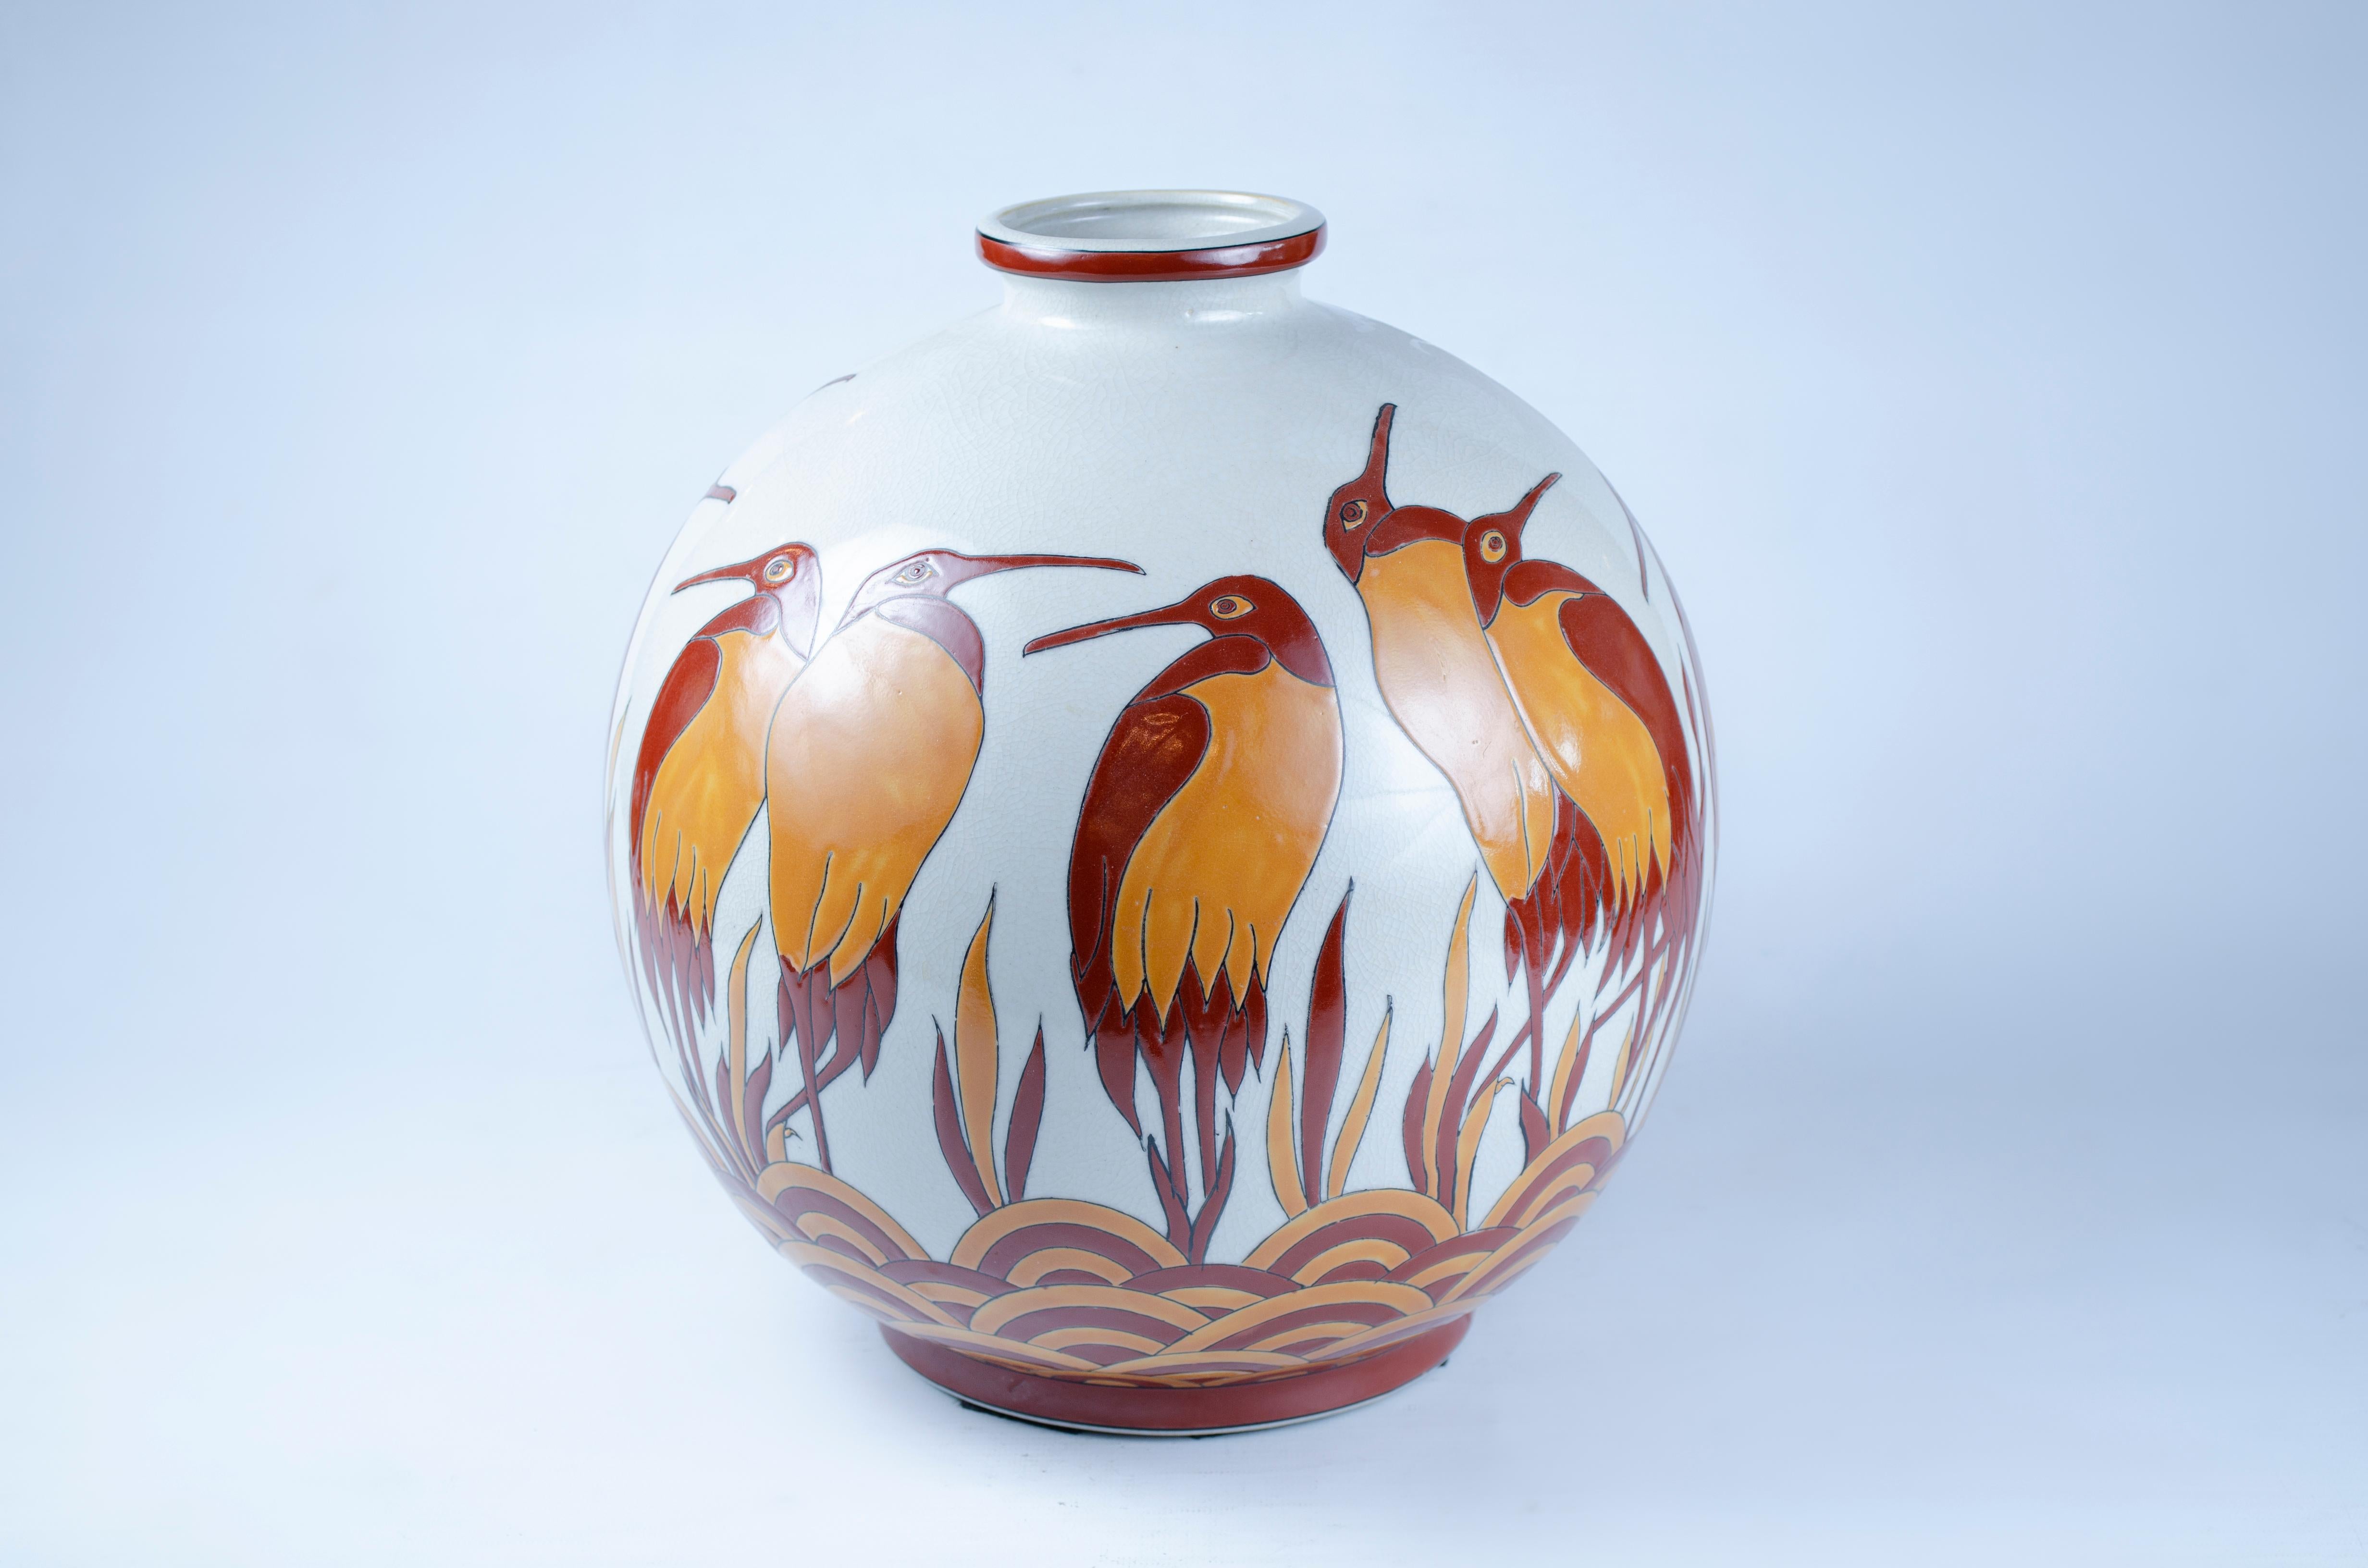 Ceramic vase designed by Keralouve made by Charles Catteau (1880-1966). Signed Keralouve, Belgium, AD003 - MC.

Belgium, CIRCA 1970.